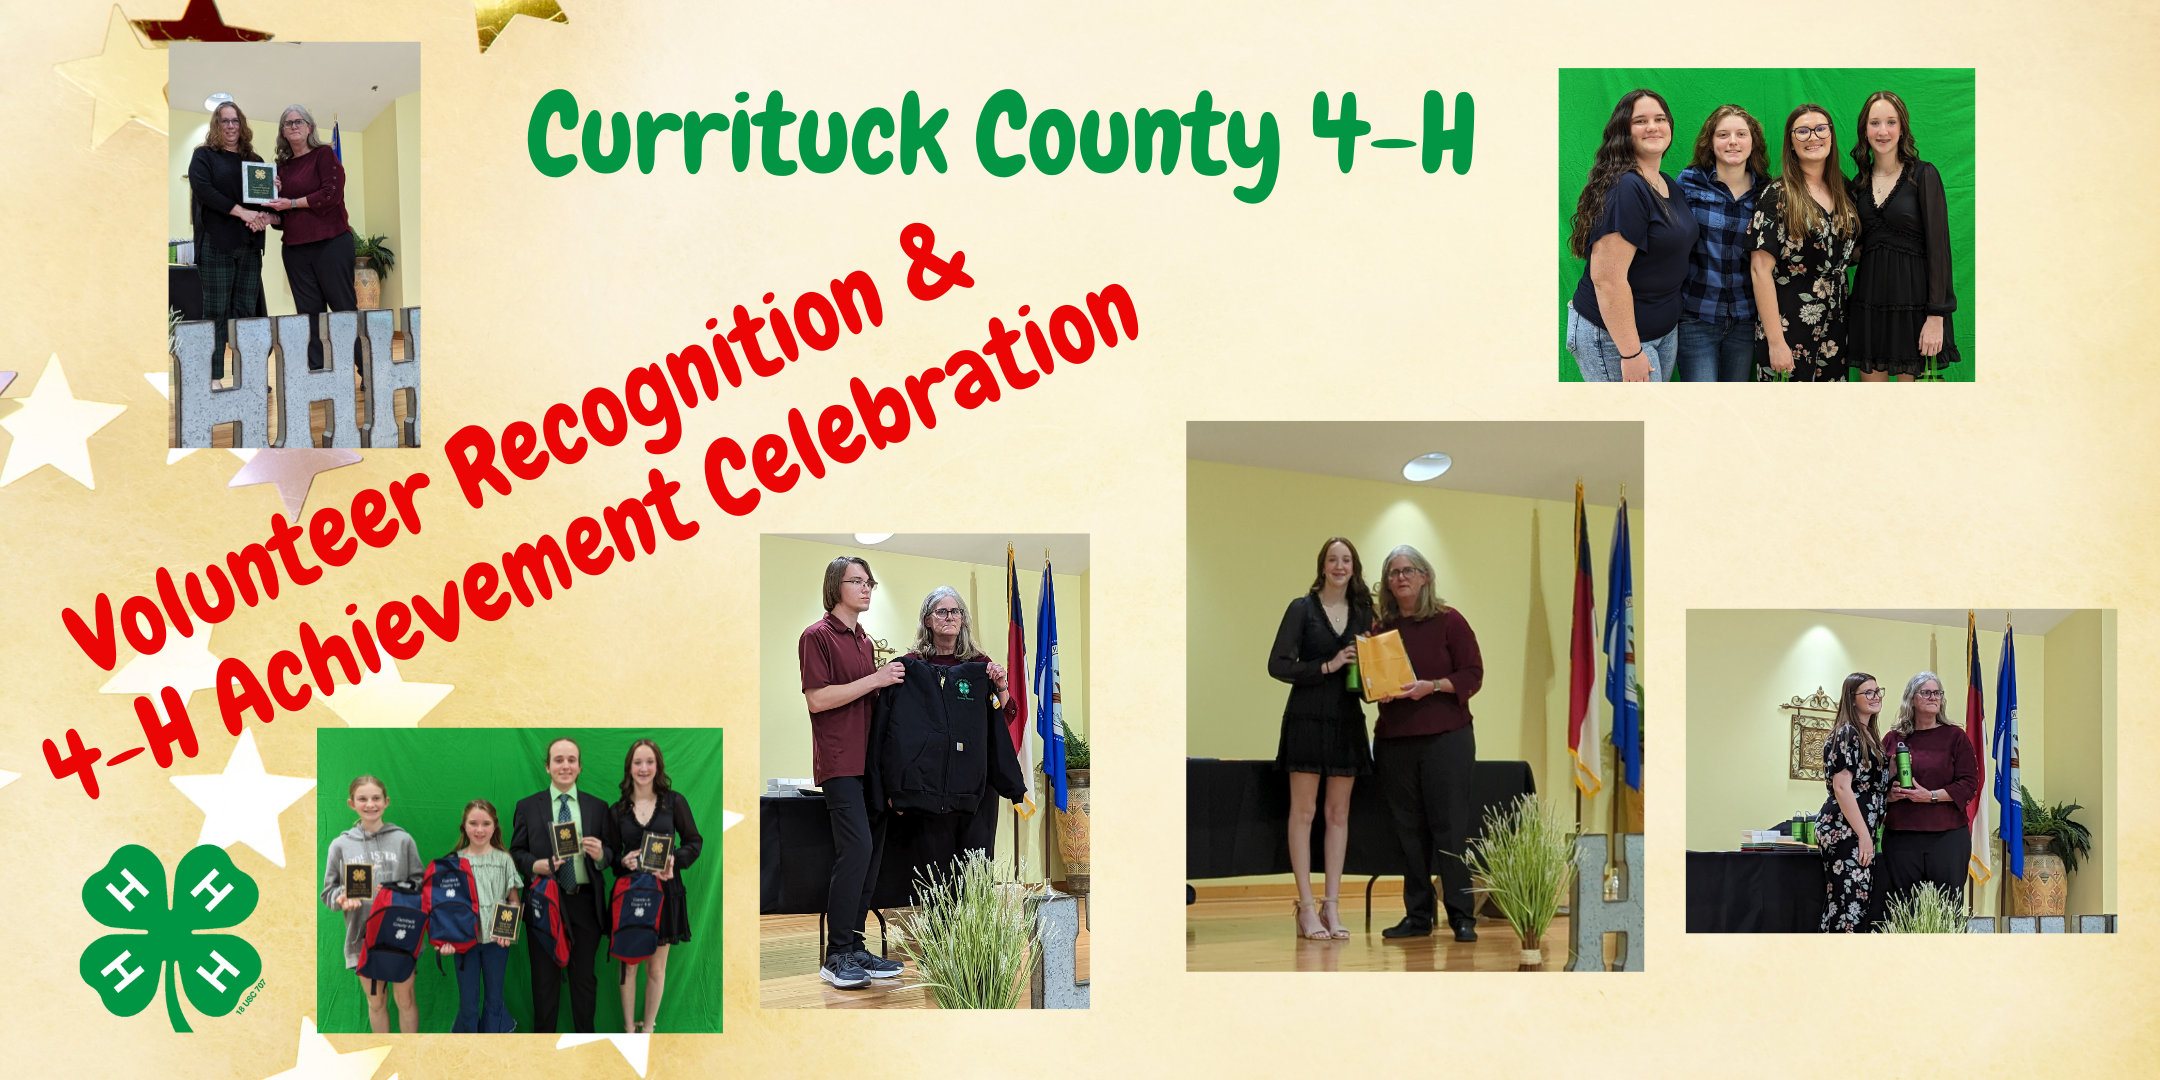 Currituck County 4-H honors member achievements, volunteers